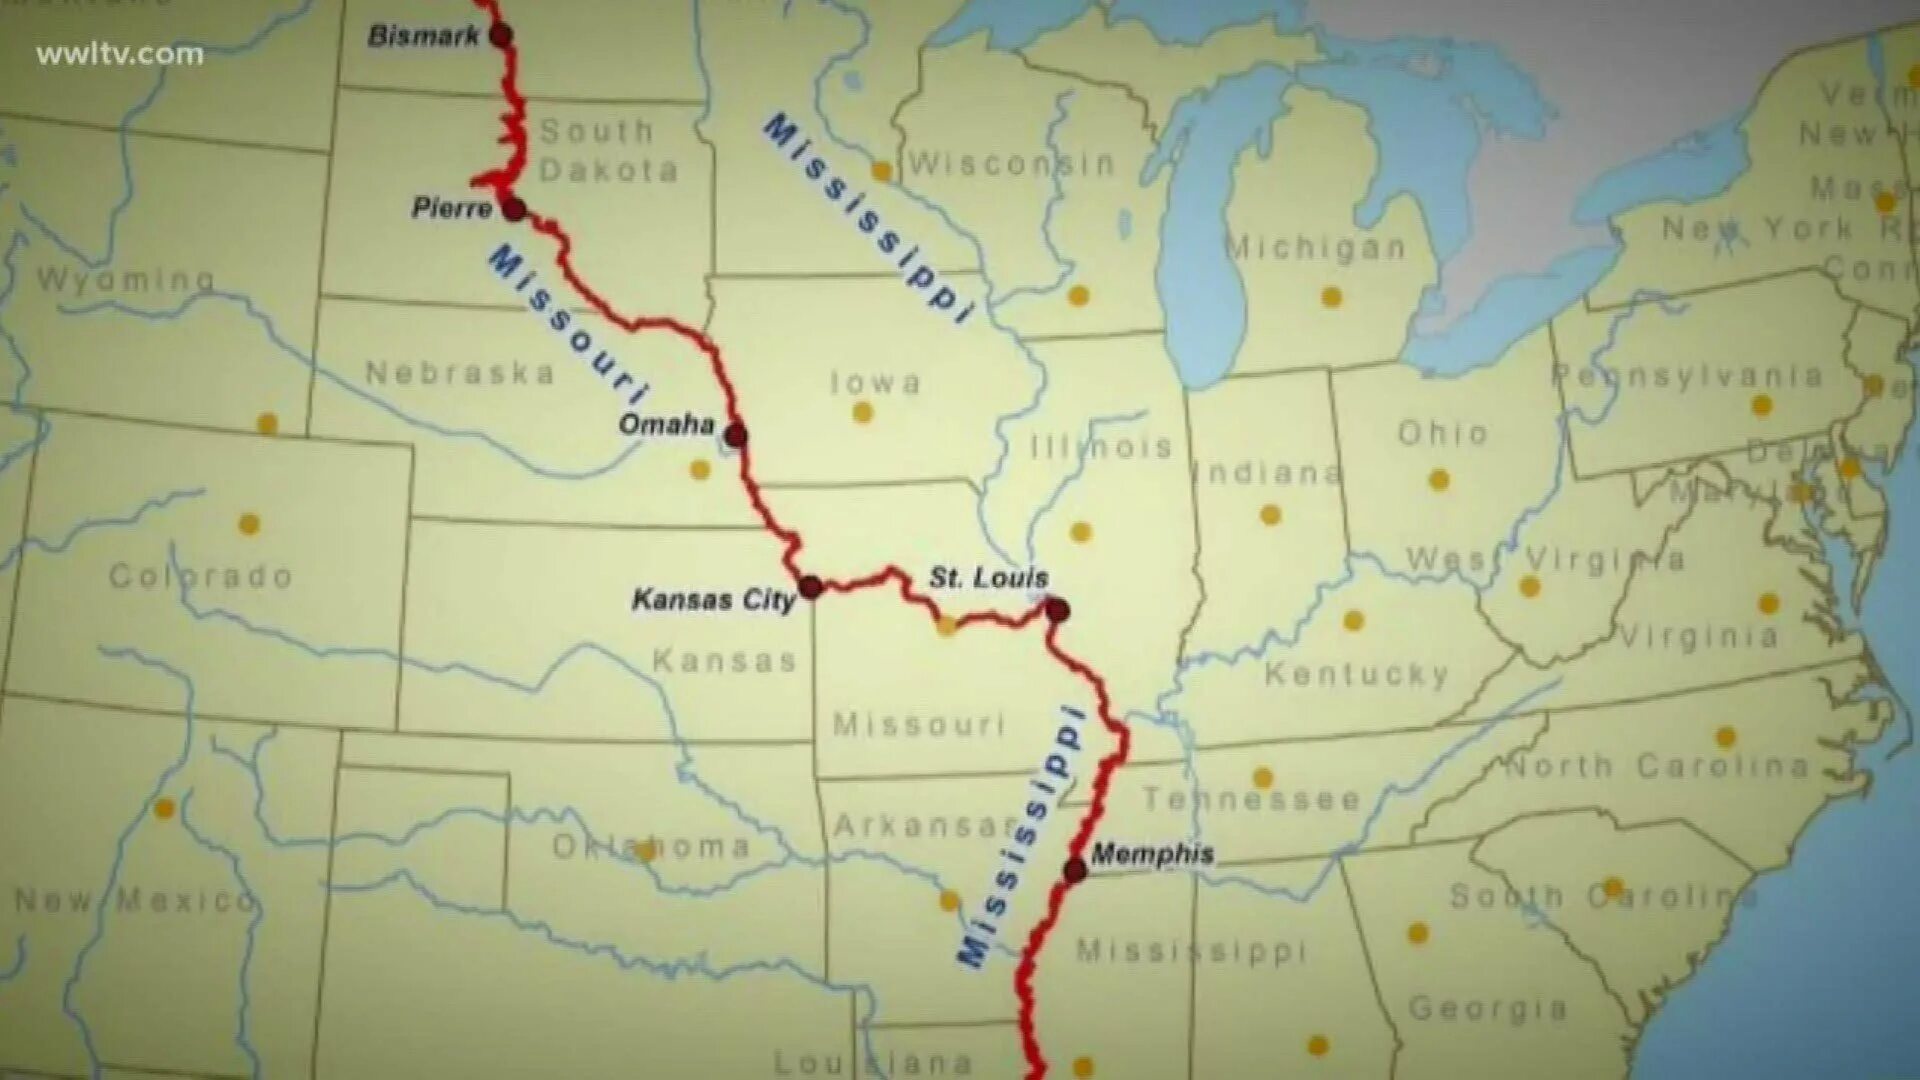 Миссури бассейн какого. Исток реки Миссисипи. Миссисипи и Миссури на карте. Истоки реки Миссисипи.